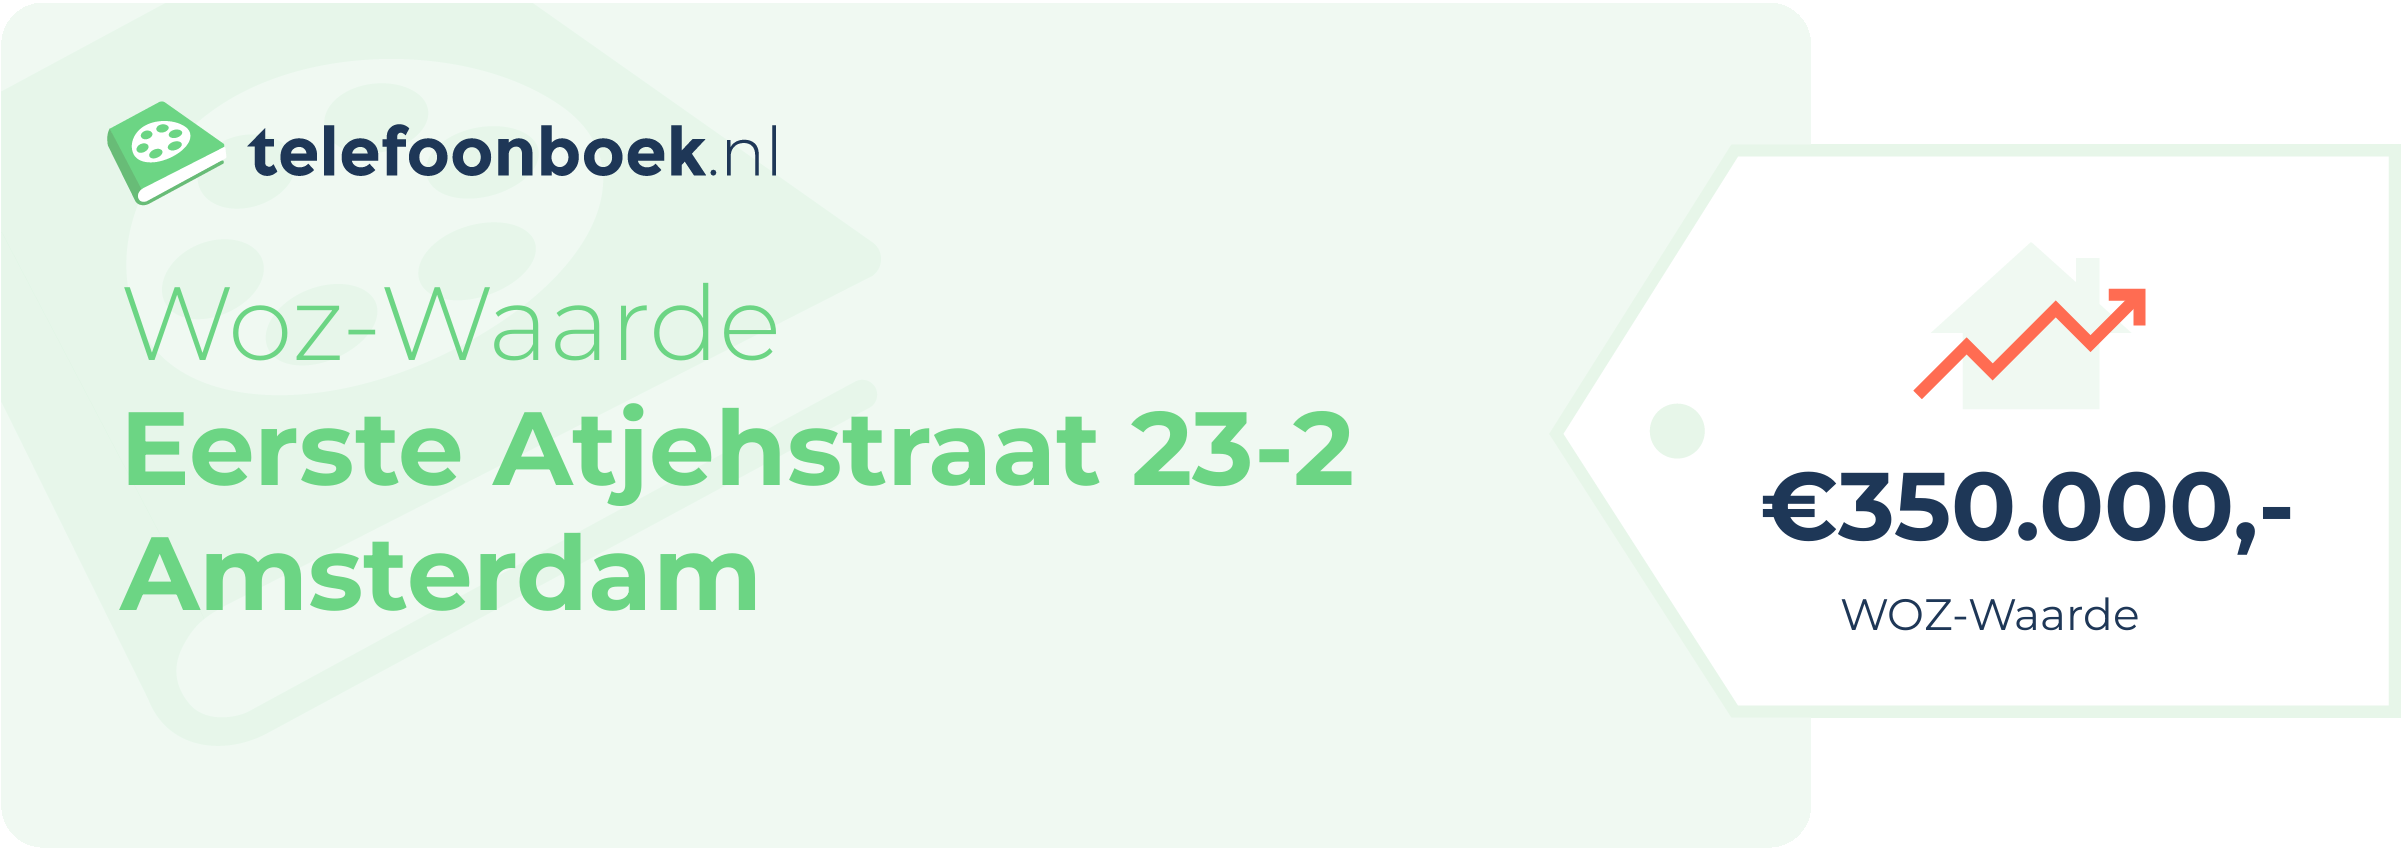 WOZ-waarde Eerste Atjehstraat 23-2 Amsterdam